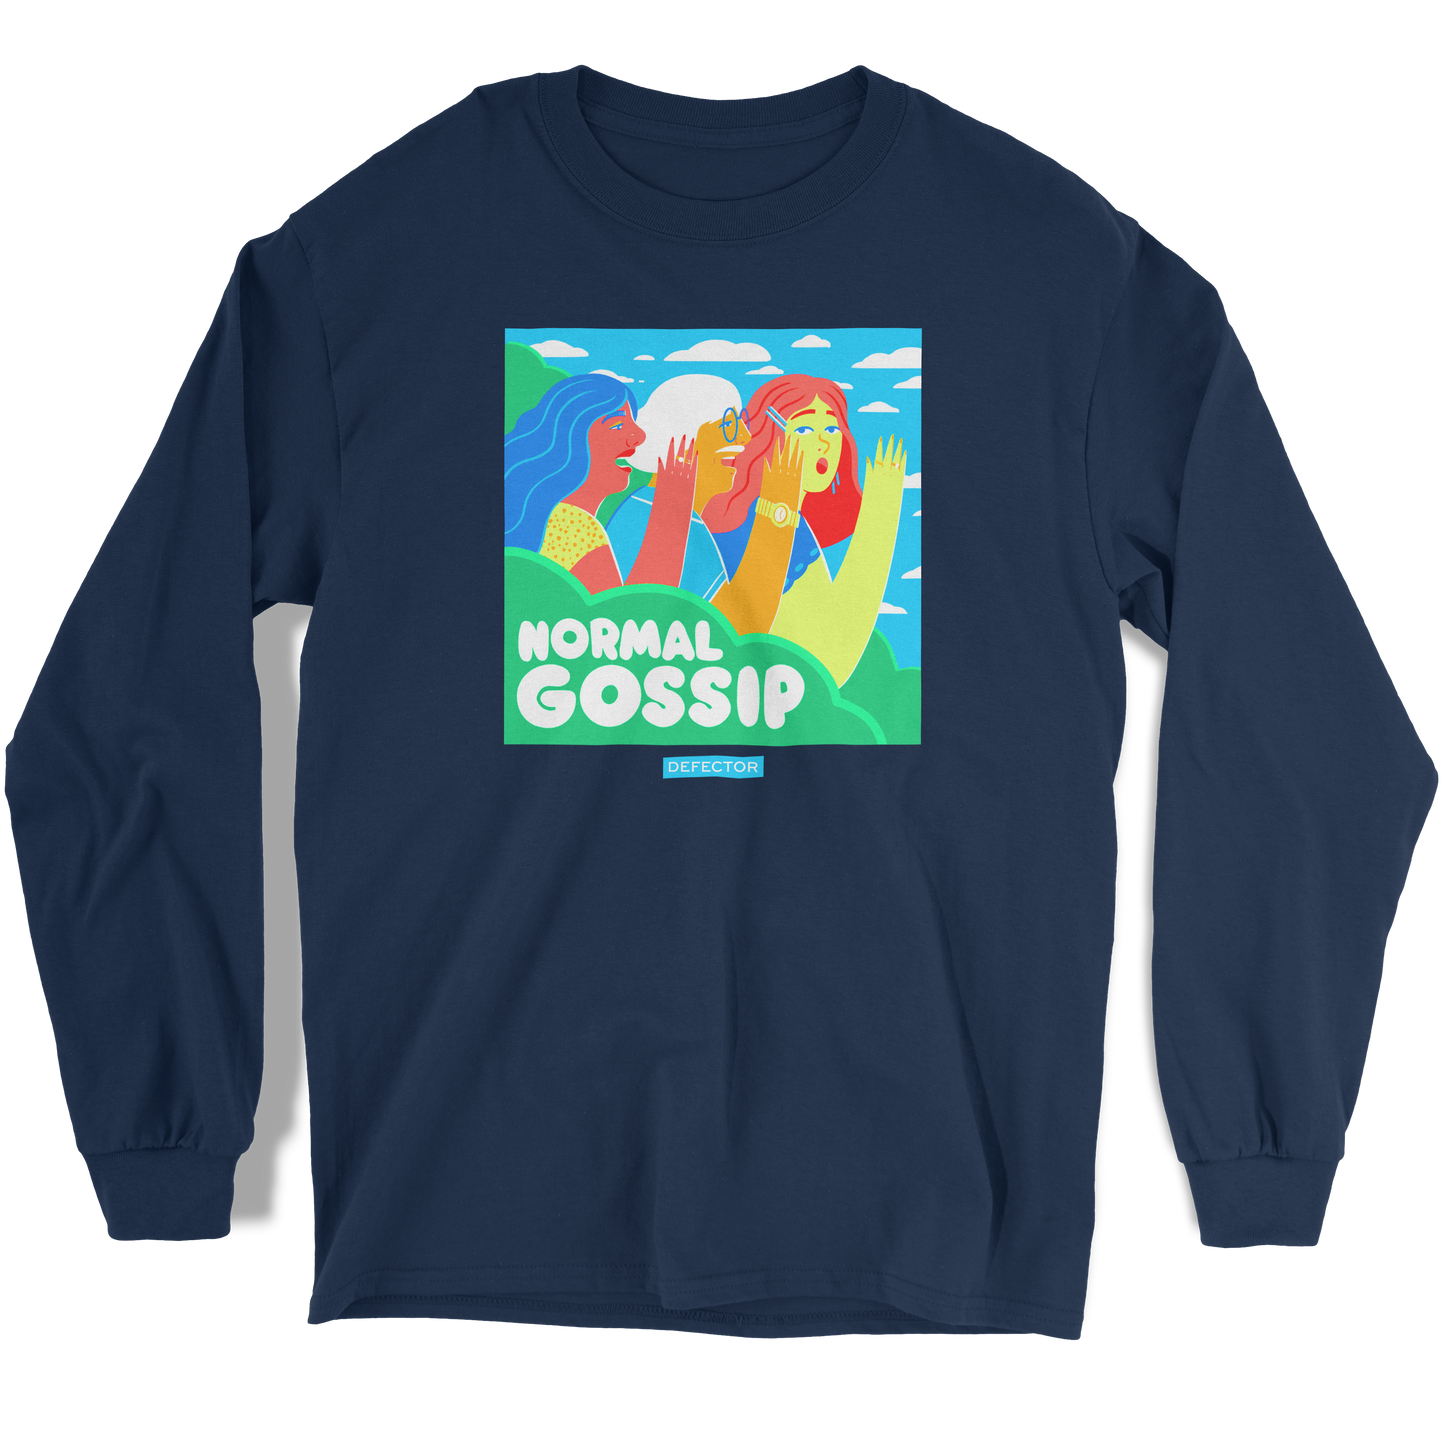 Normal Gossip logo long sleeve tee-shirt